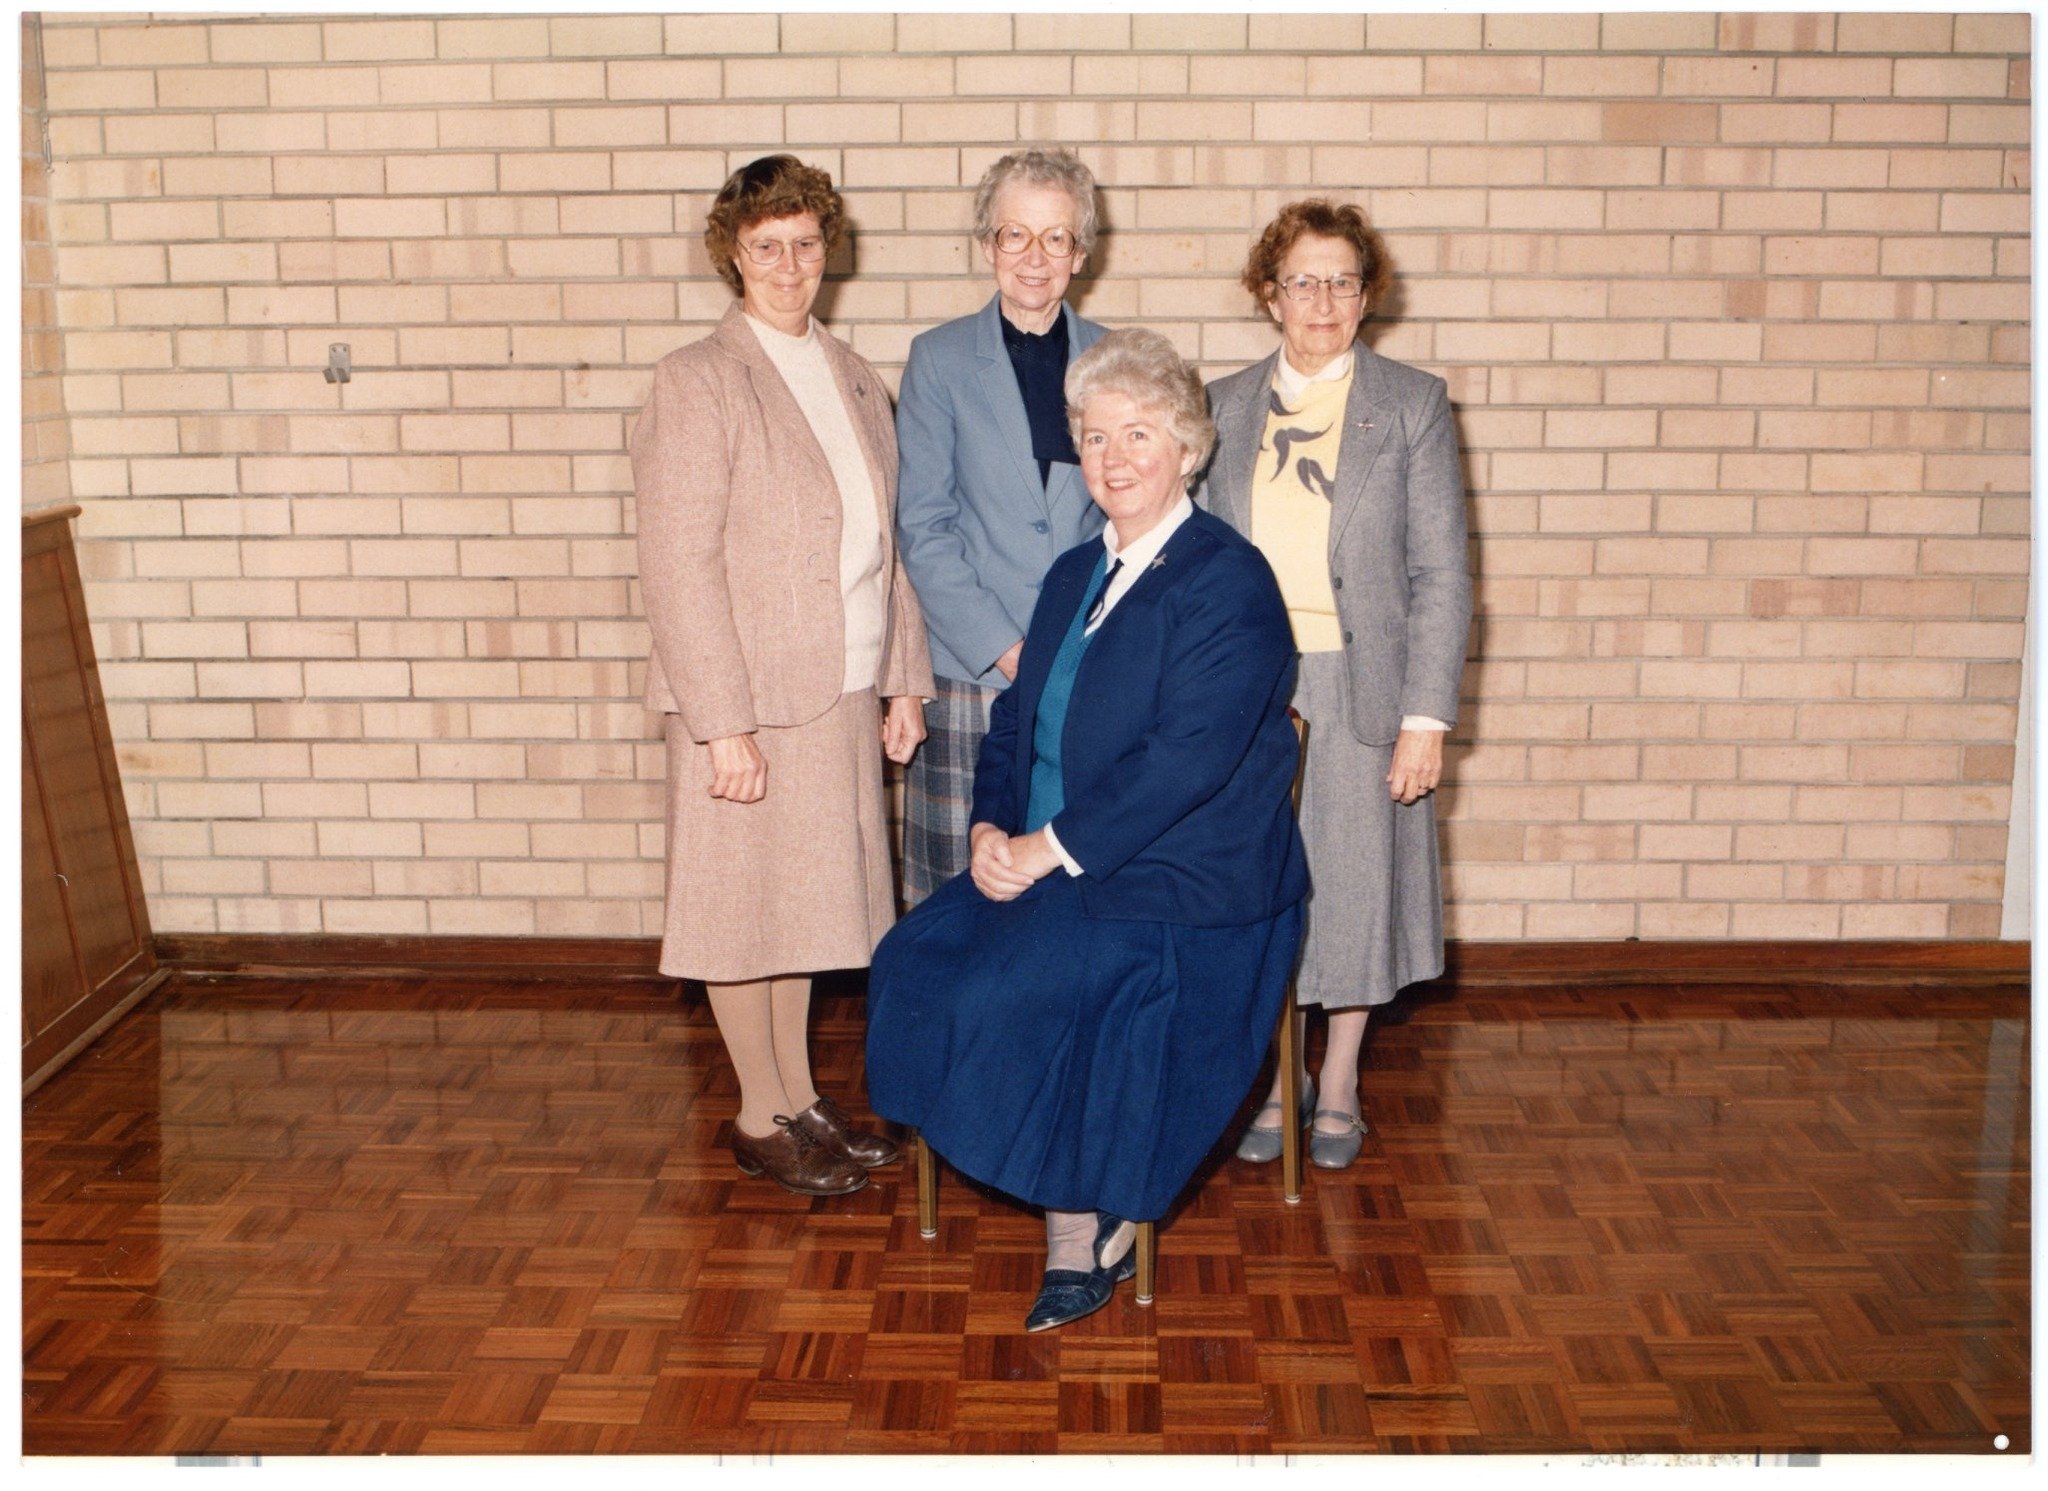  1985 - Staff Sisters of Newman College Junior School, Brigidine Campus Back: Brigid McClements, Jean Linklater, Gemma Hoban Front: Dorothea Hickey 